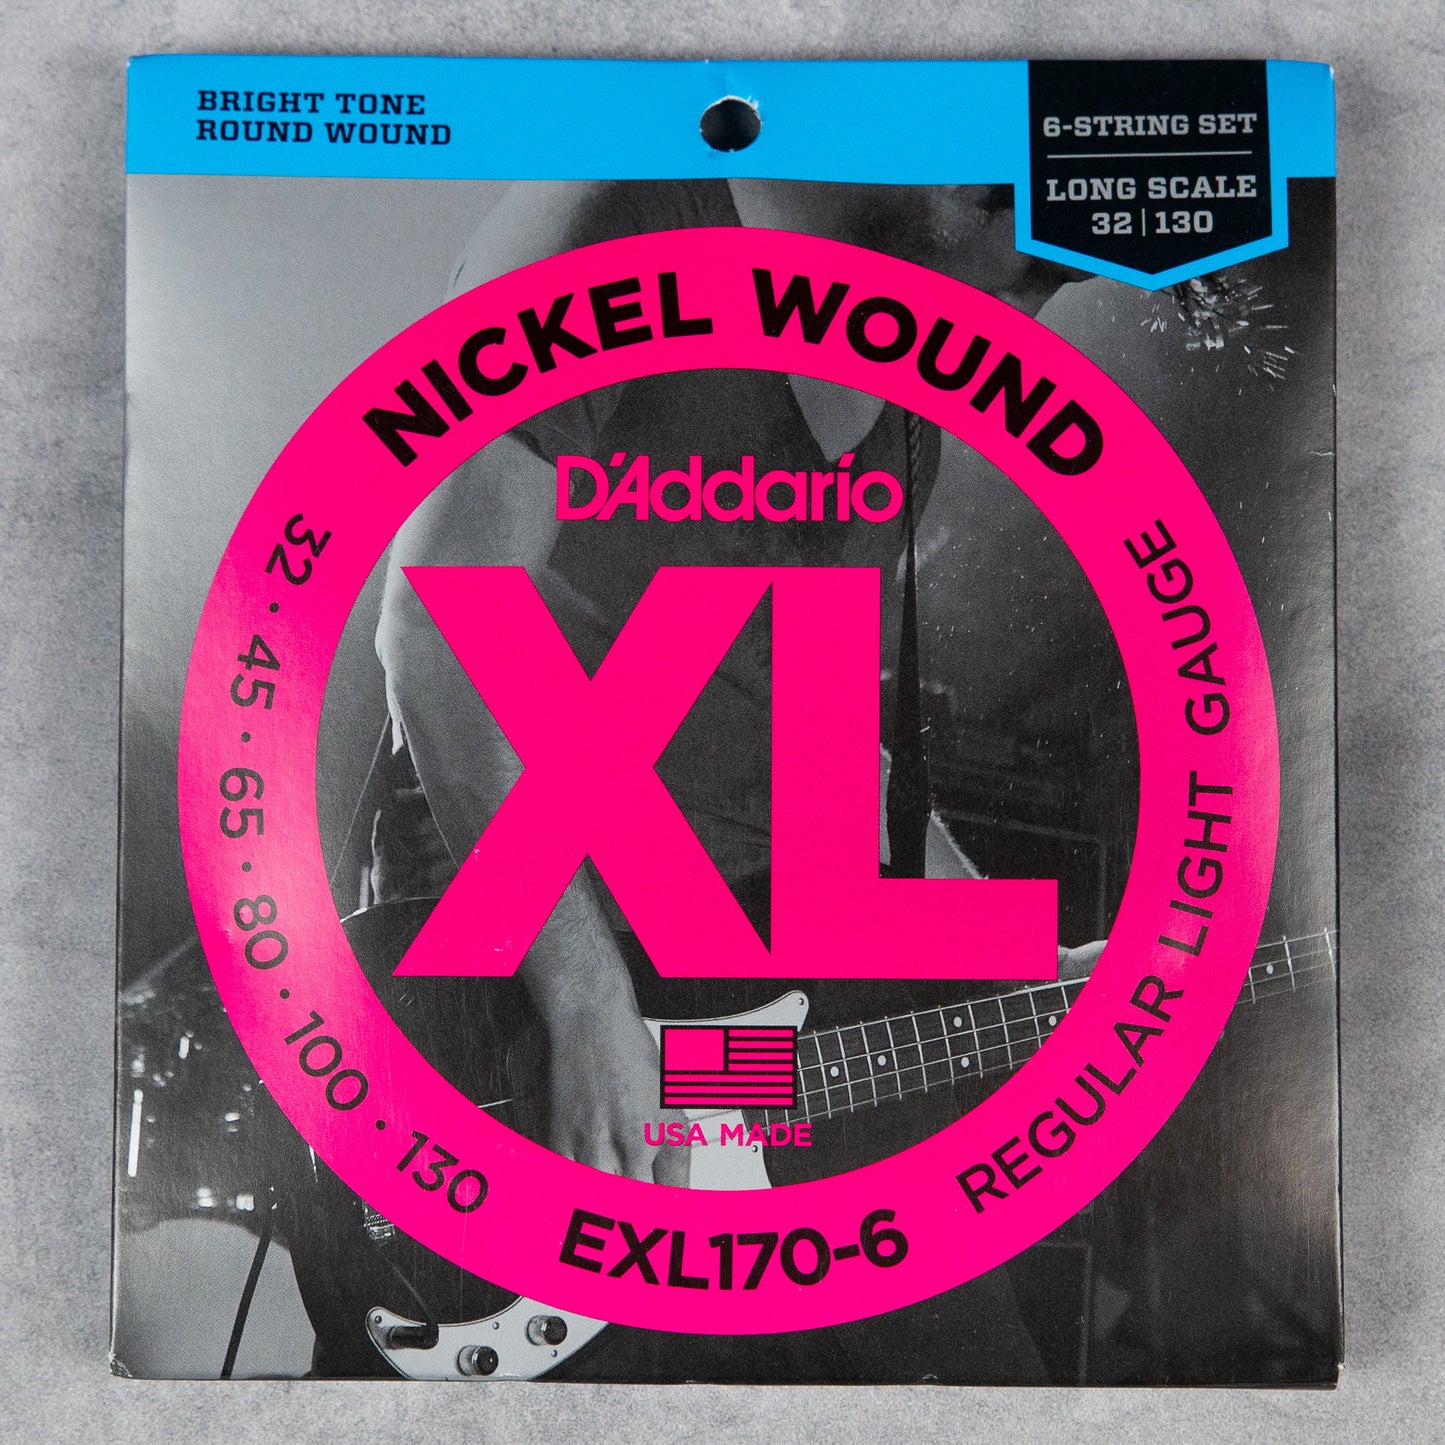 D'Addario EXL170-6 Nickel Wound 6-String, Light, 32-130, Long Scale